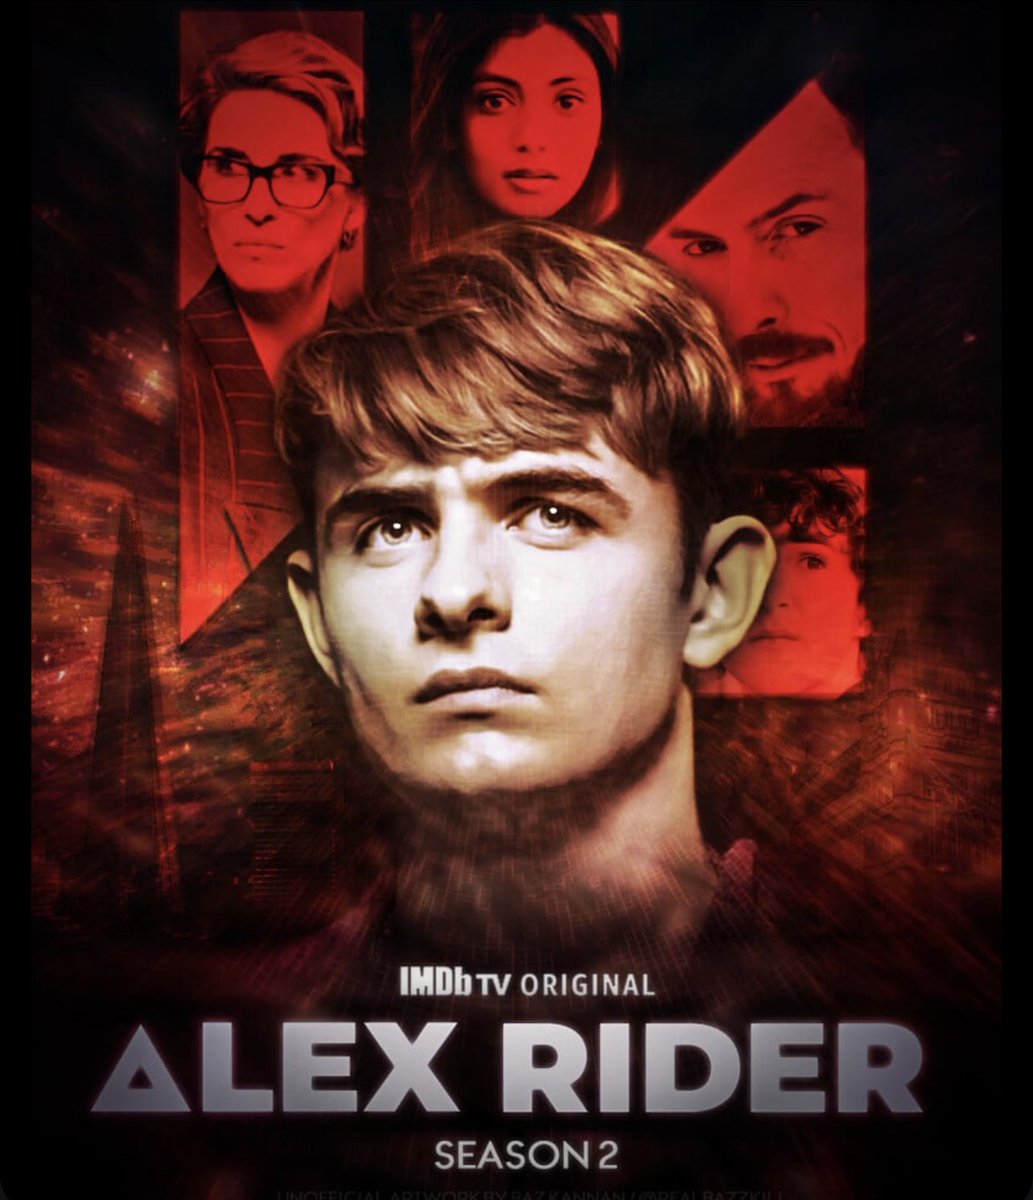 #AlexRider Season 2 posters